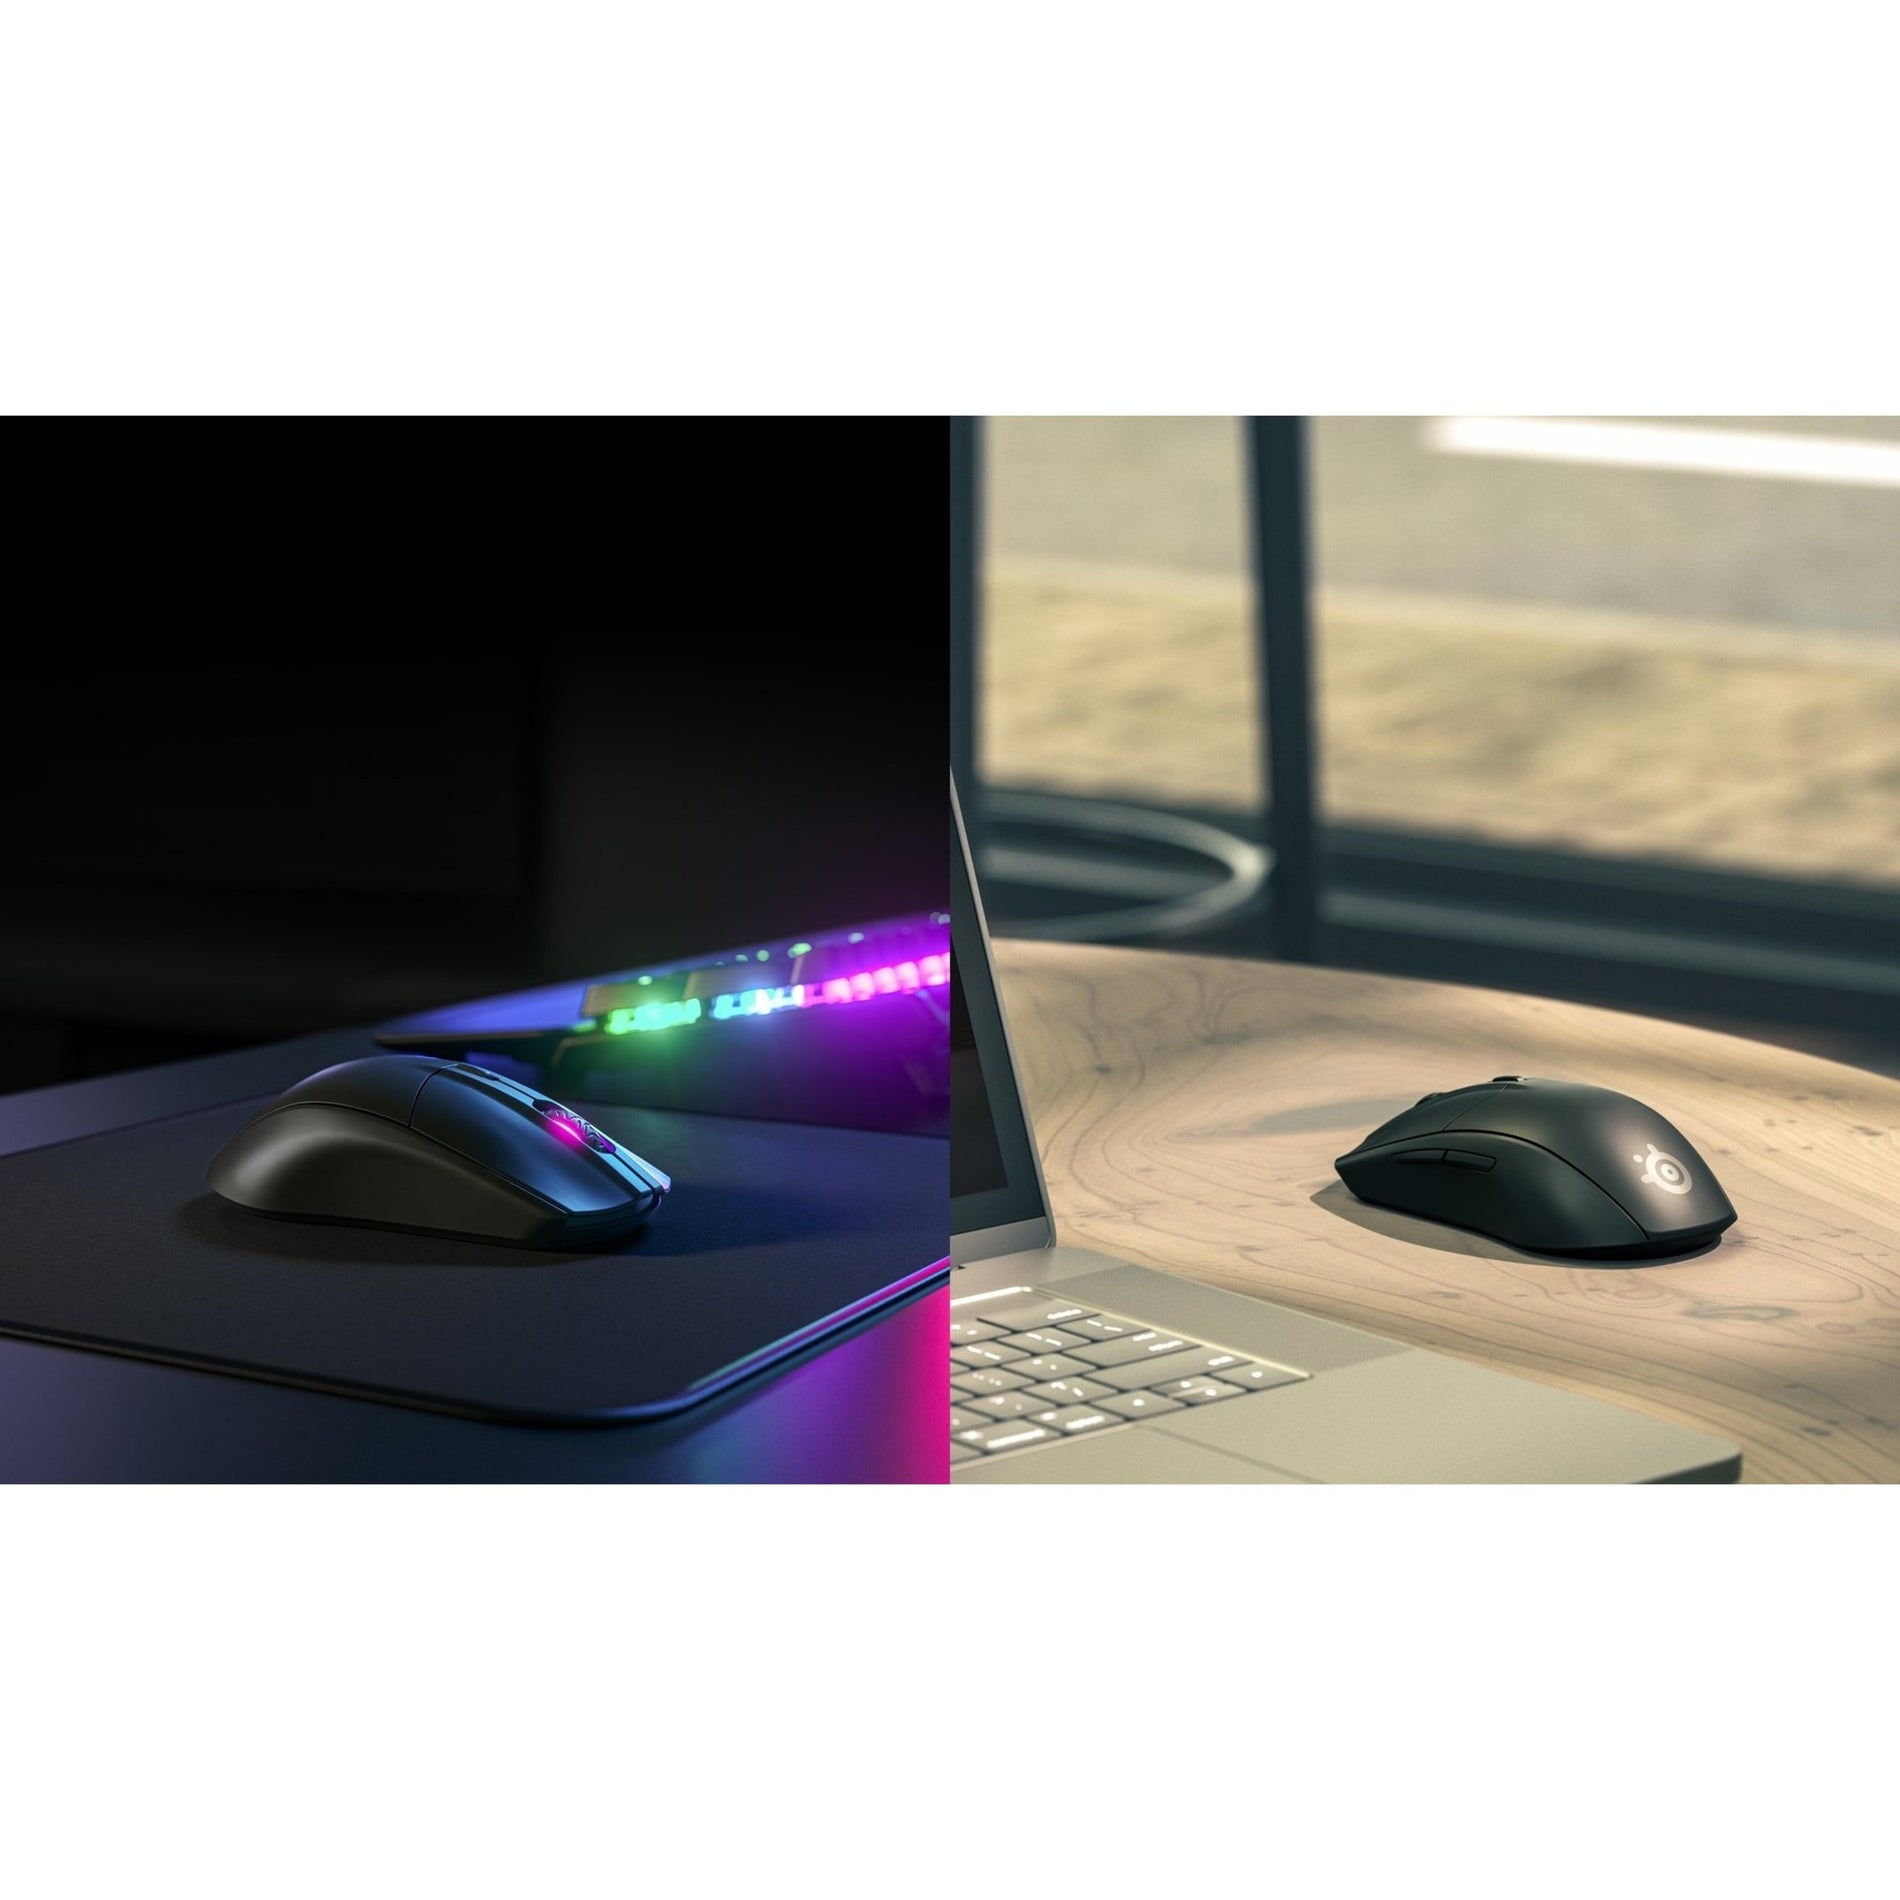 SteelSeries 62521 Rival 3 ゲーミング マウス、エルゴノミックな 立体感 18000 dpi ワイヤレス 接続. - スチールシリーズ 62521 ライバル 3 ゲーミング マウス。